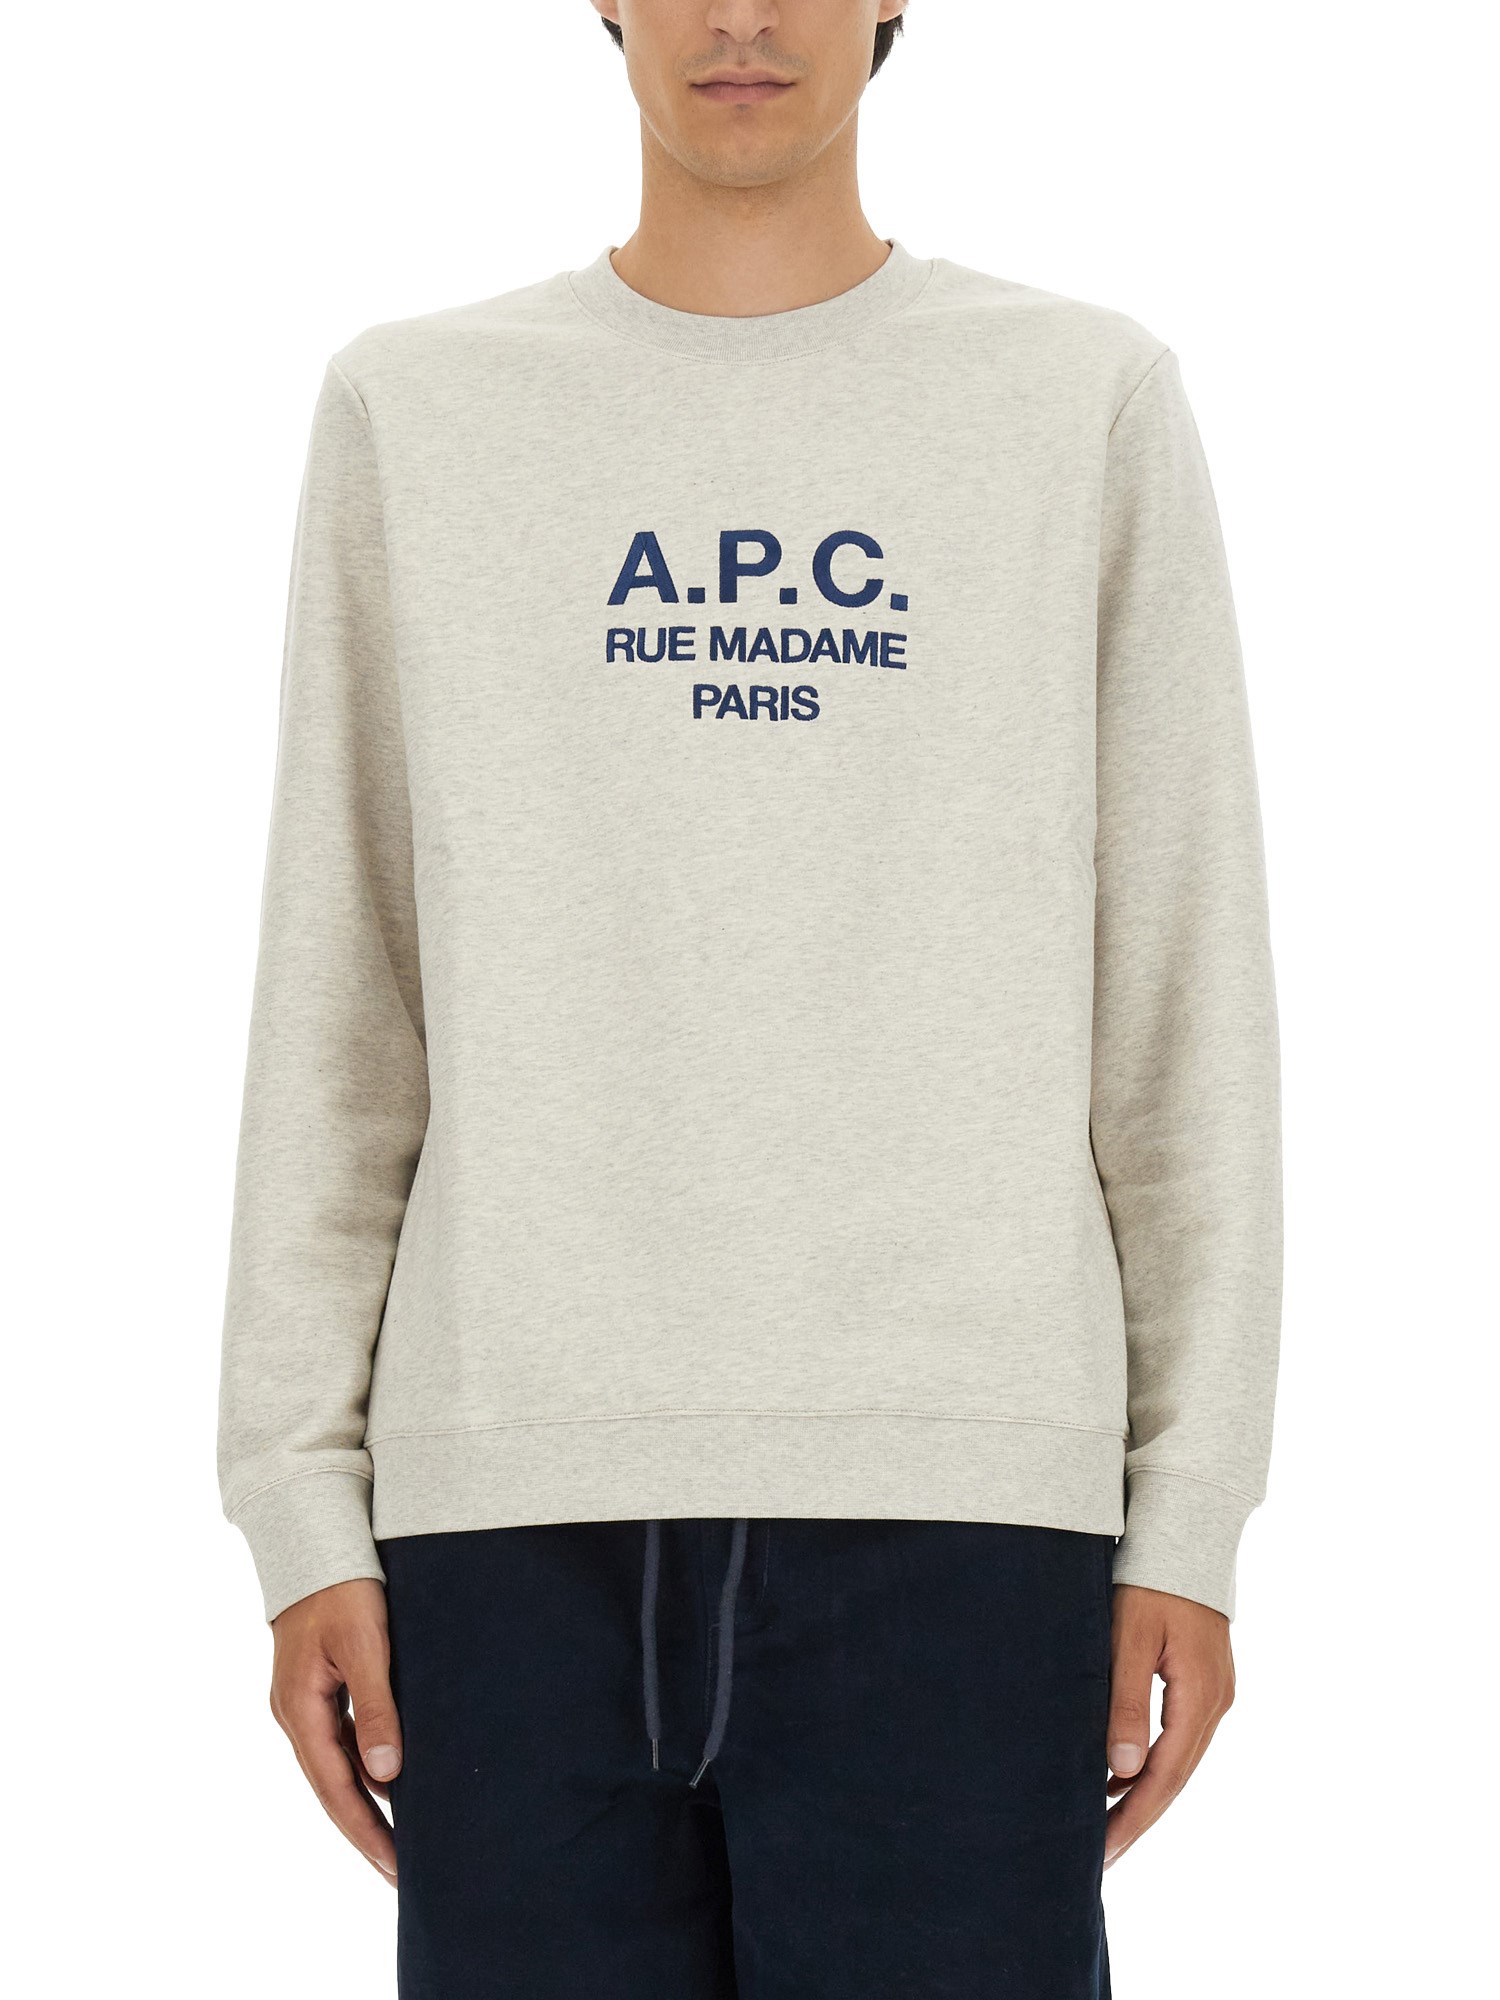 a.p.c. rufus sweatshirt